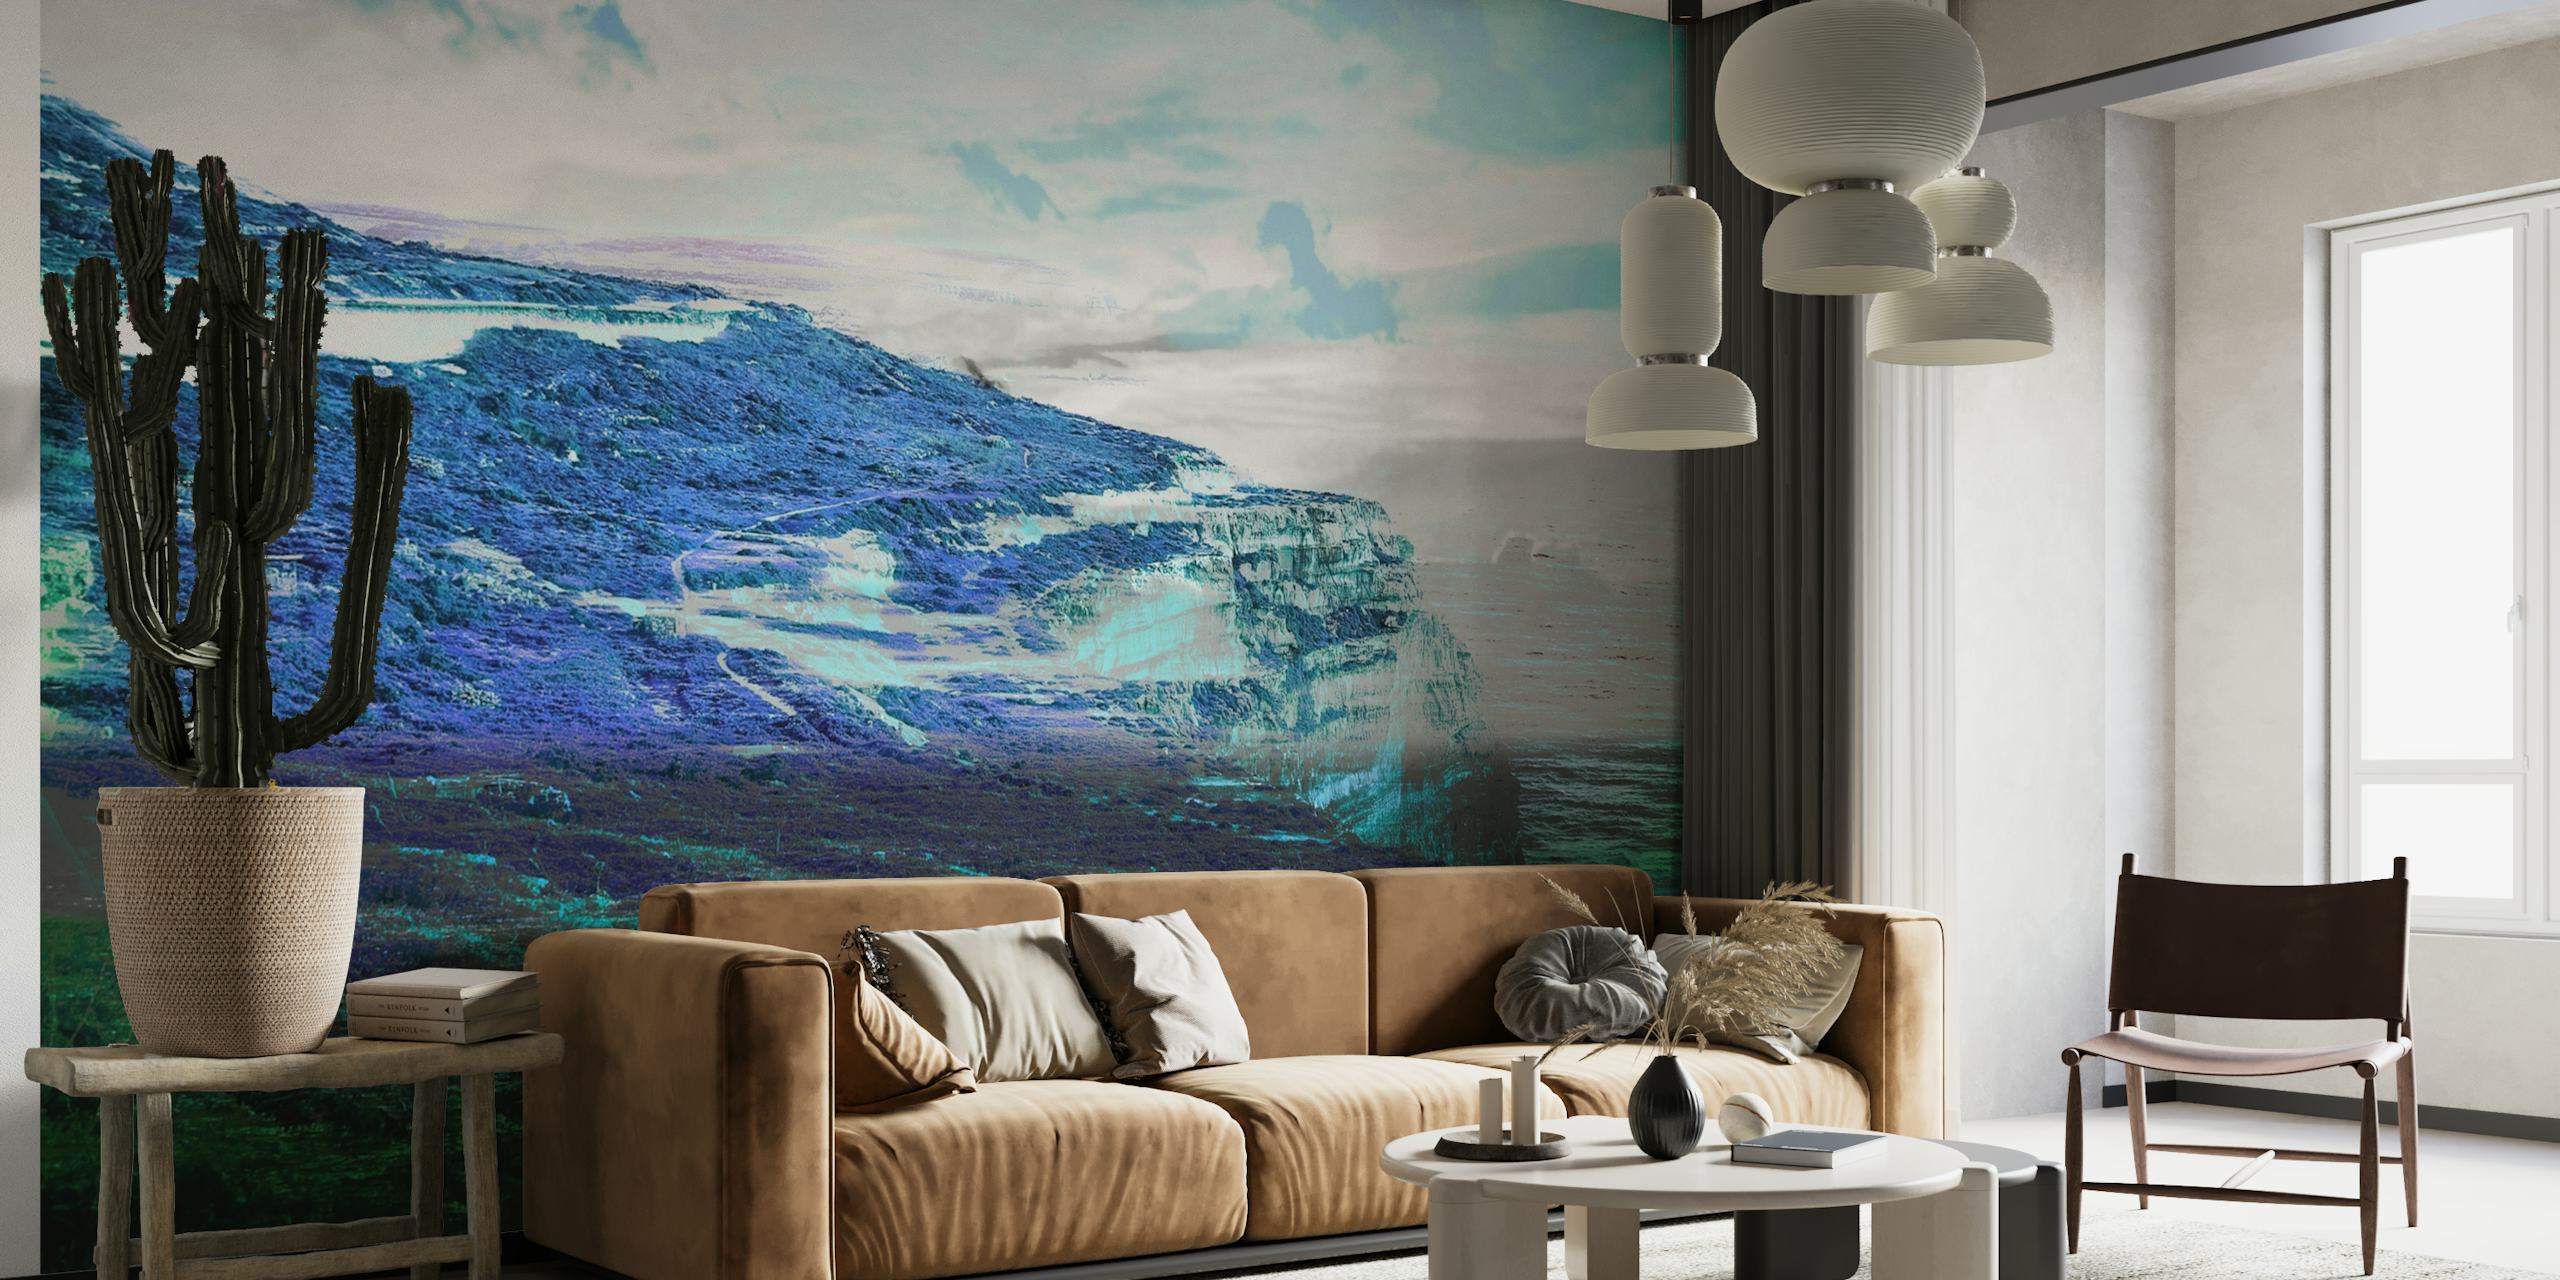 Fotomural de paisaje nórdico de montaña con tonos brumosos de azul y verde